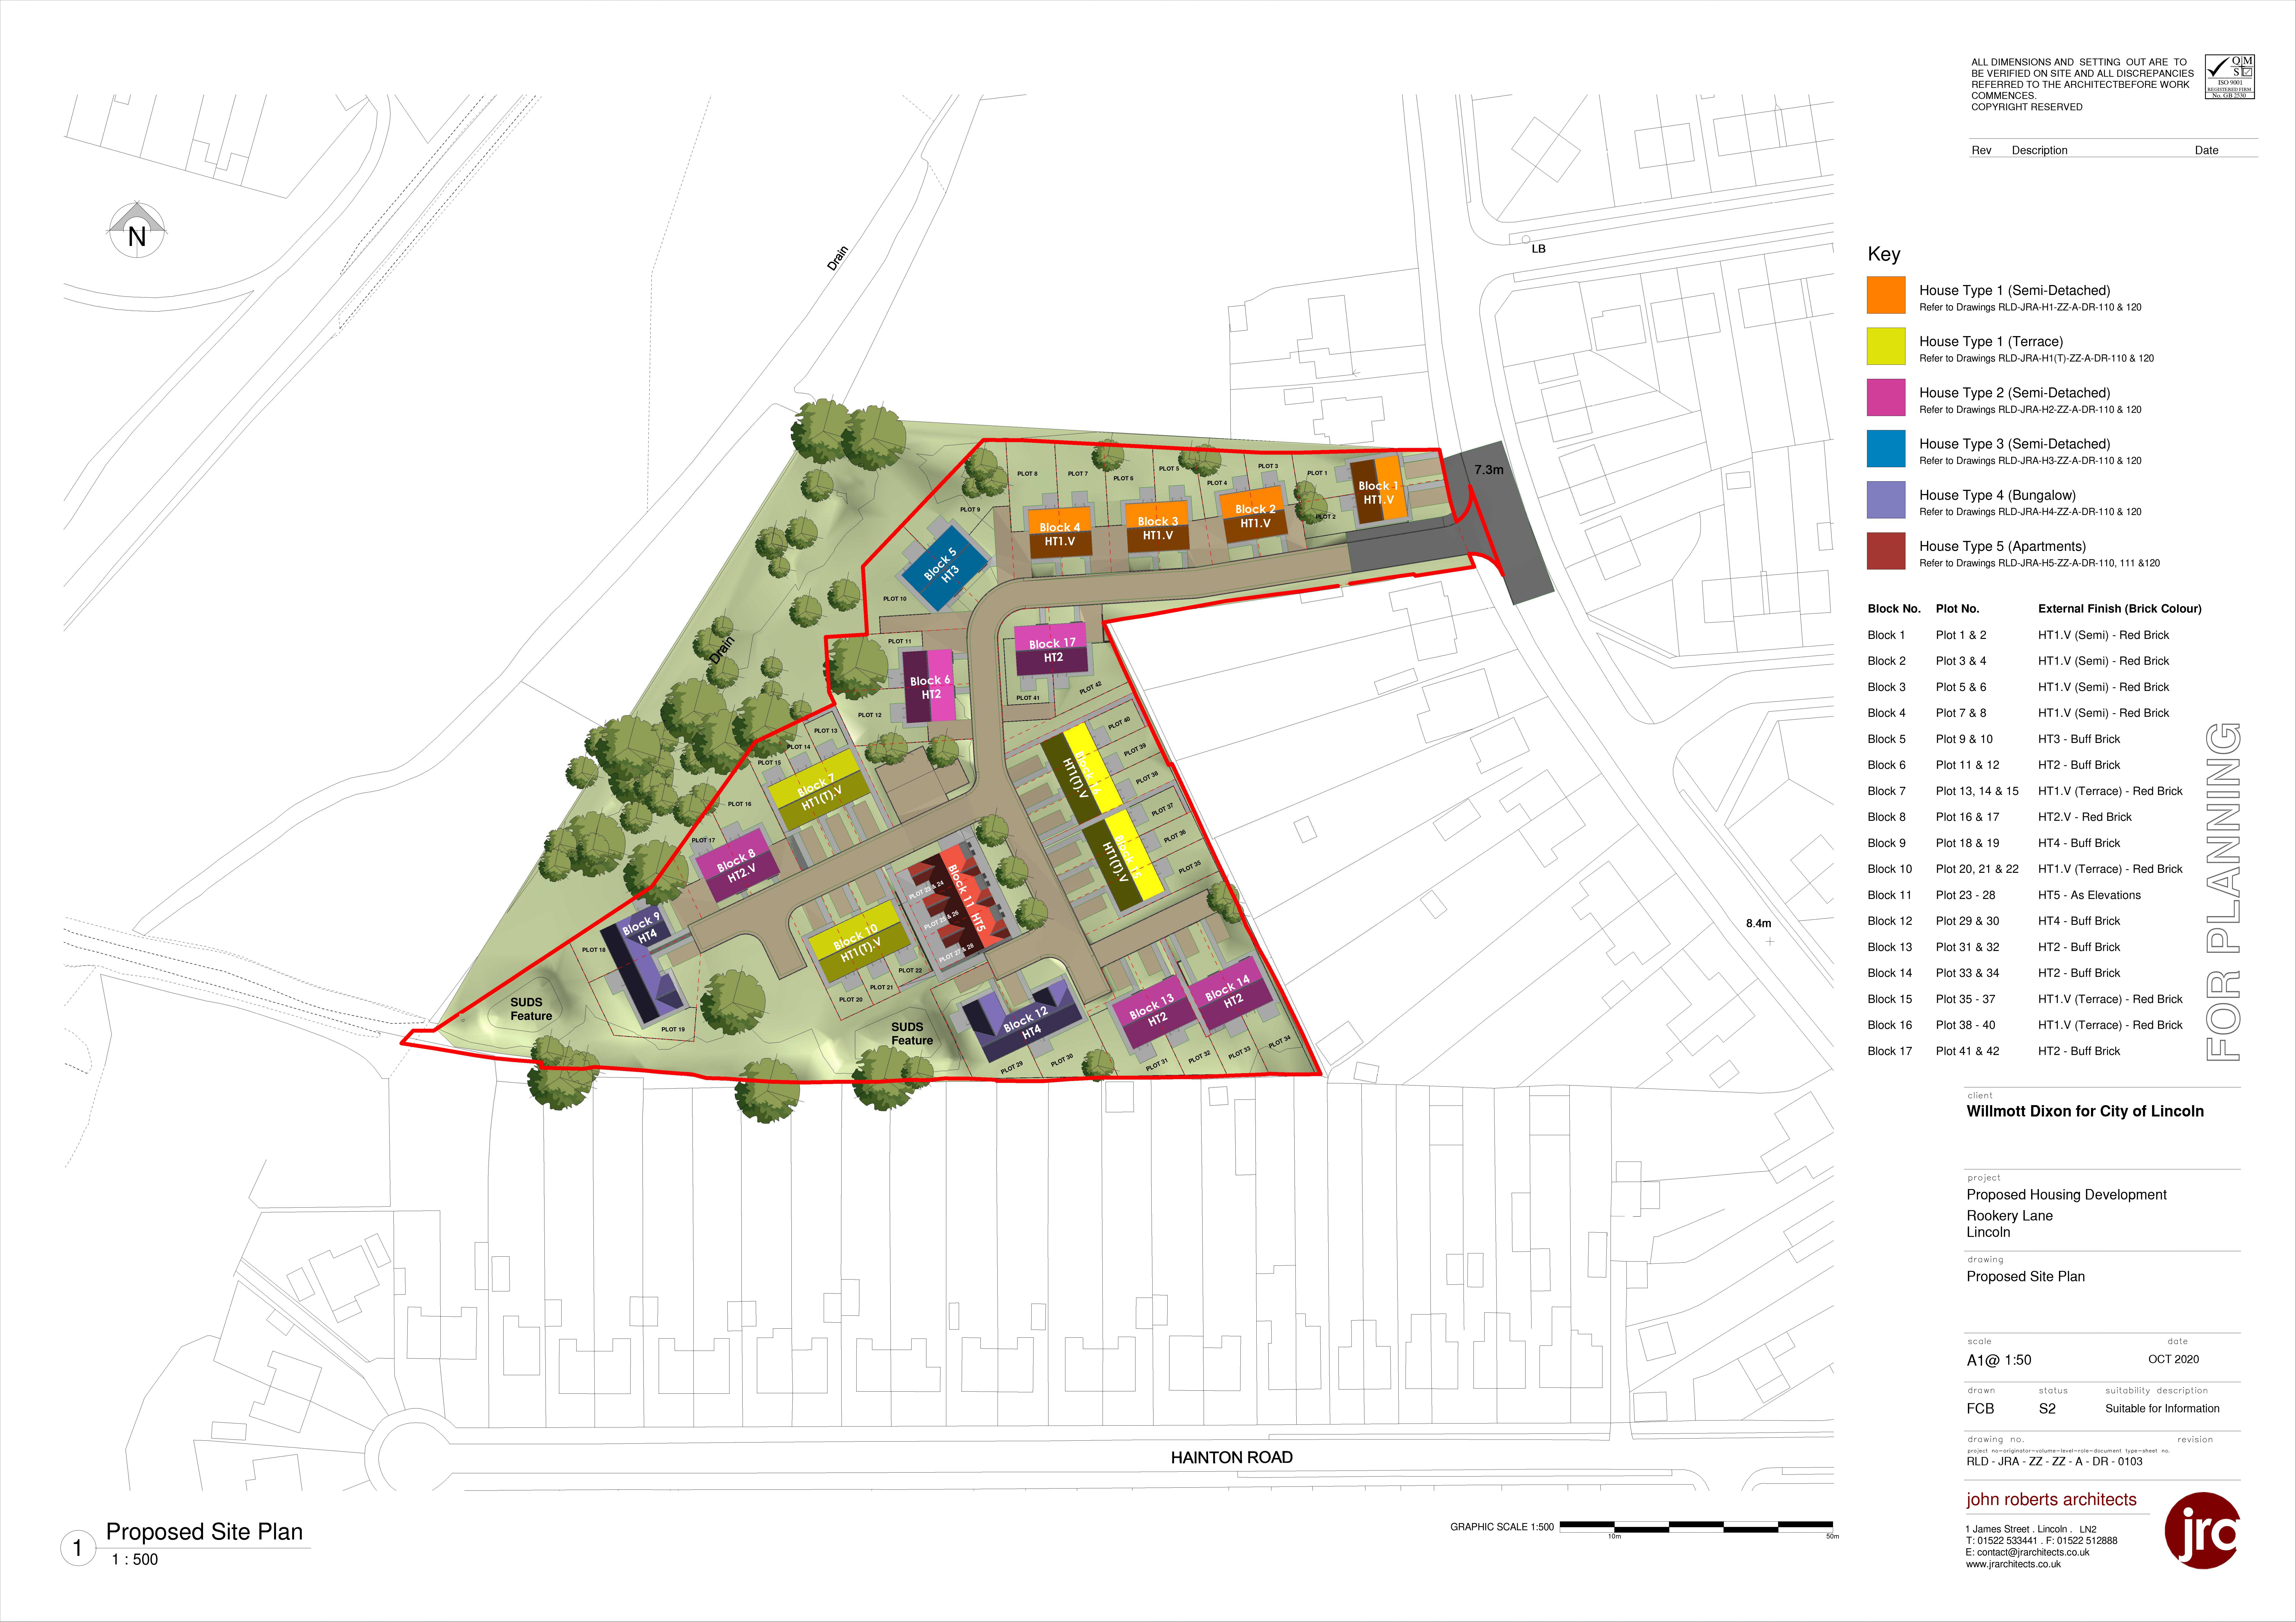 Rookery Lane Proposed Site Development Plan